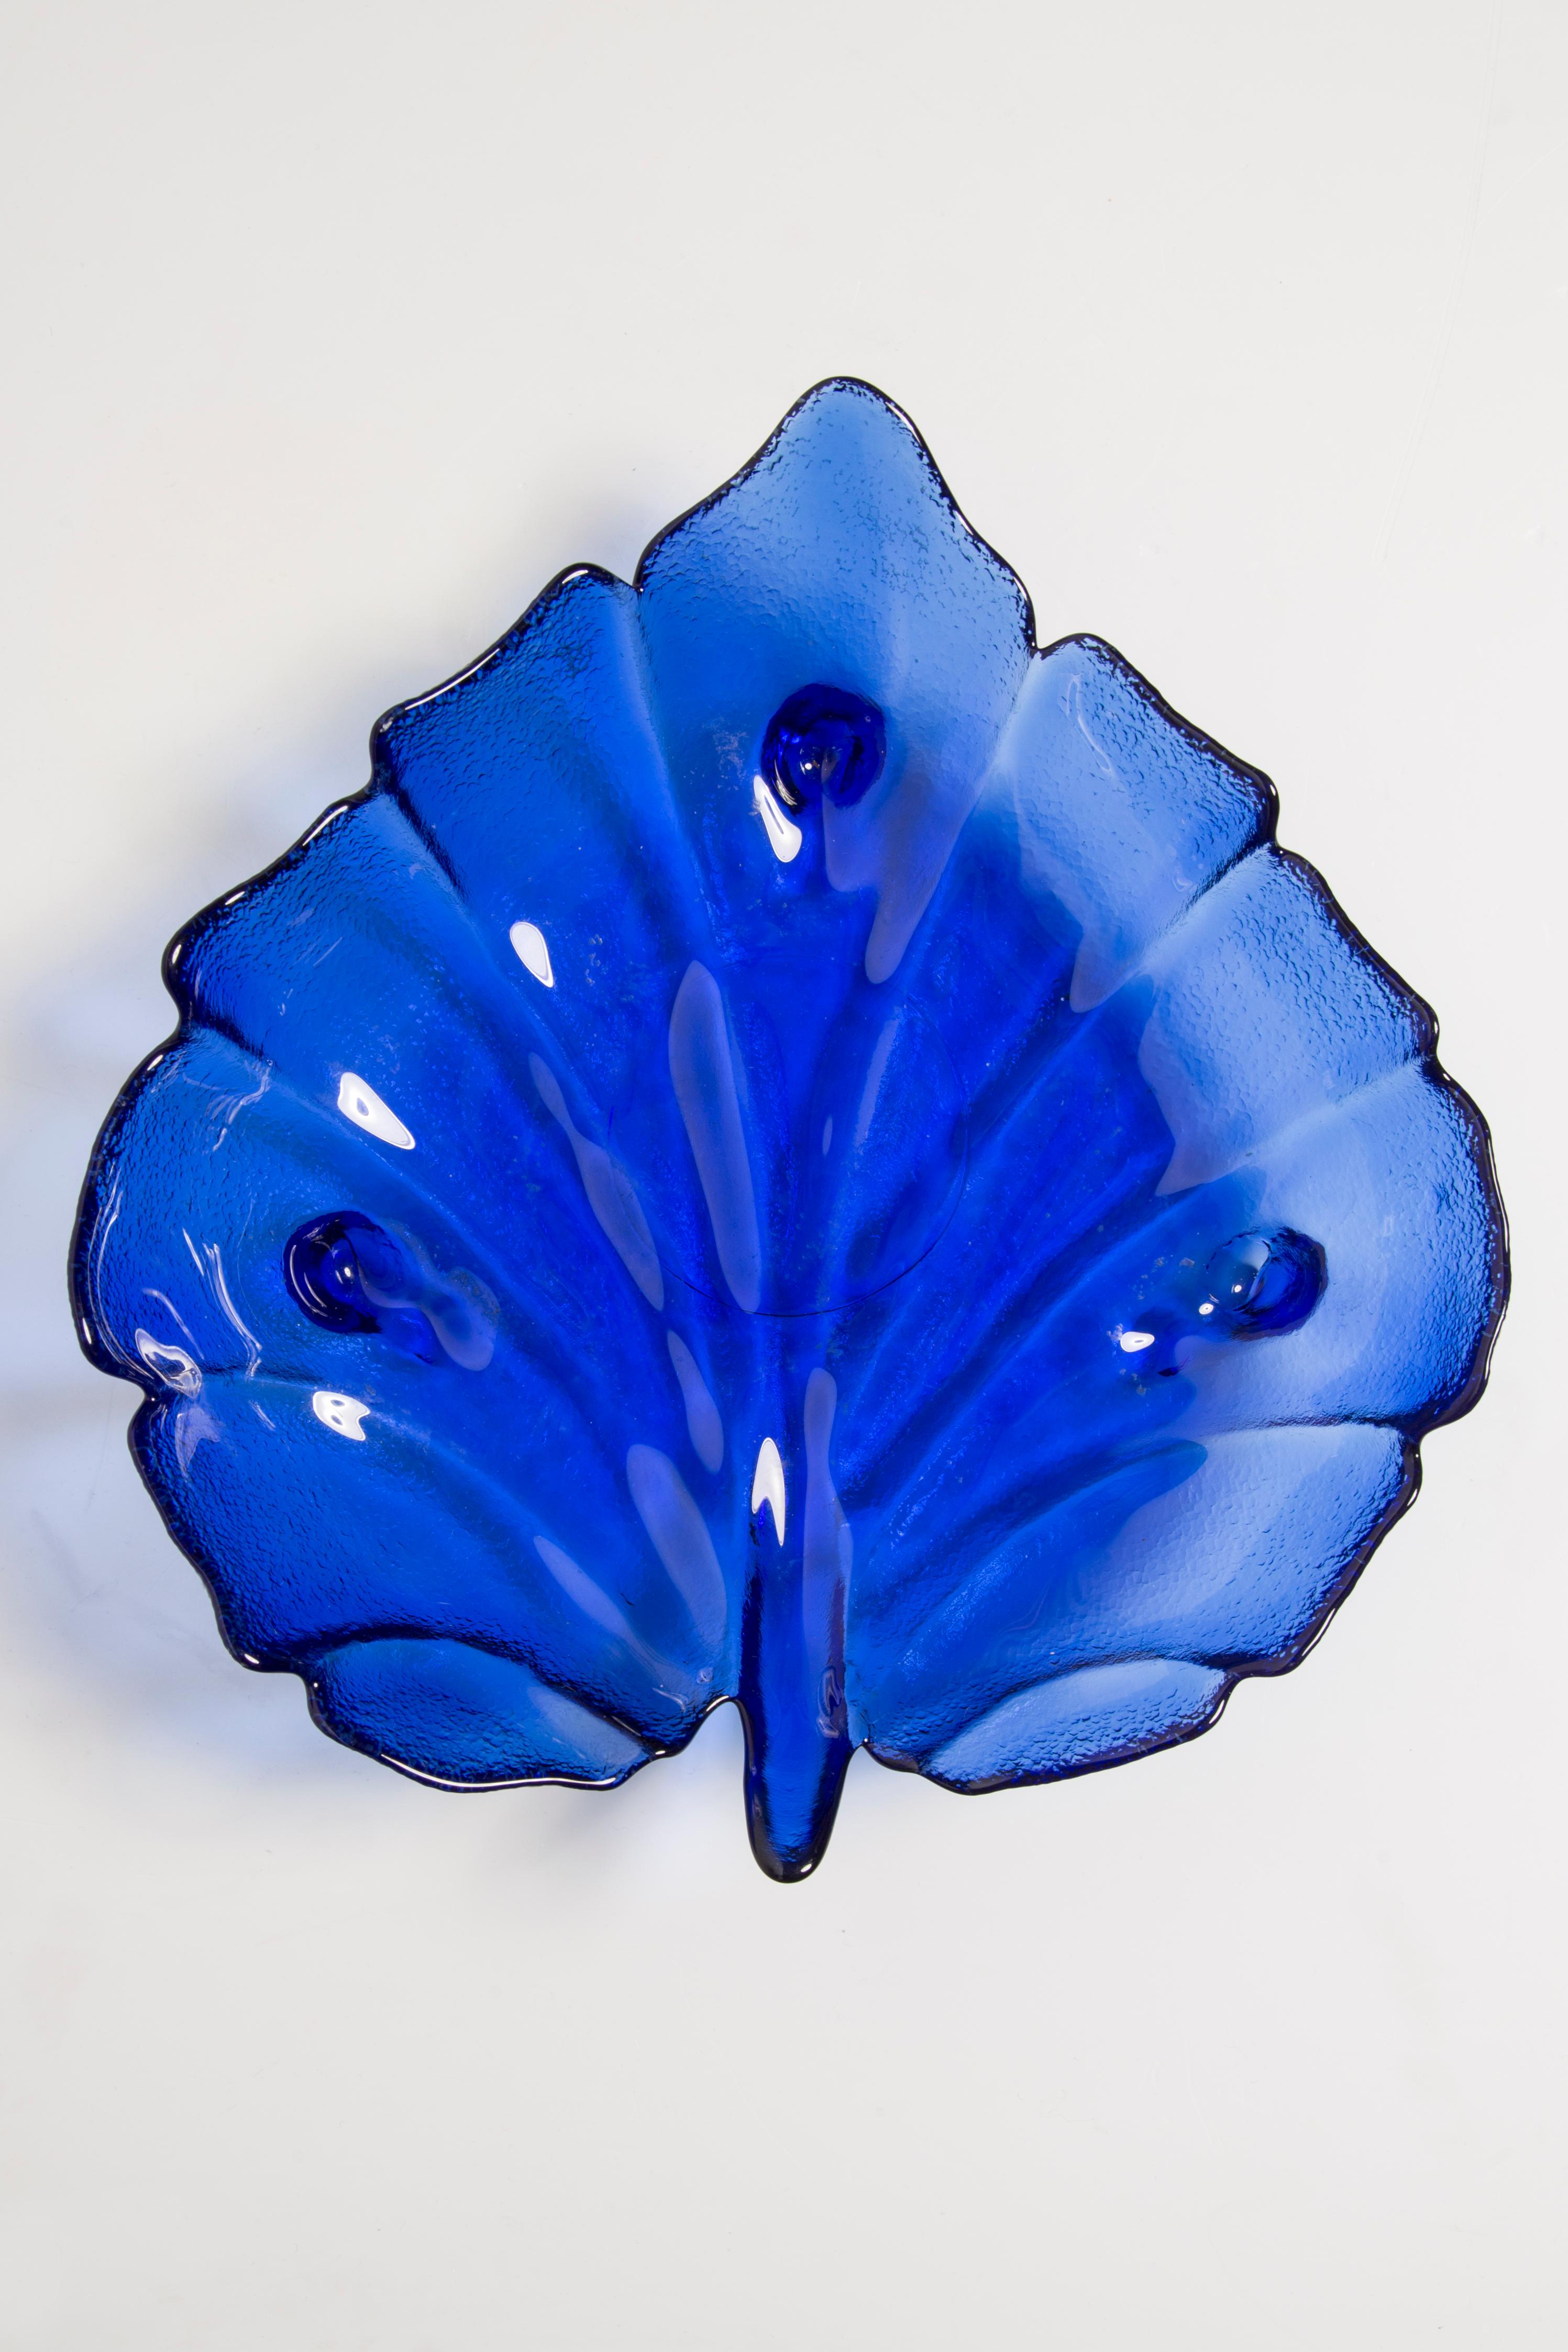 Ceramic Vintage Deep Blue Decorative Glass Leaf Plate, Italy, 1960s For Sale